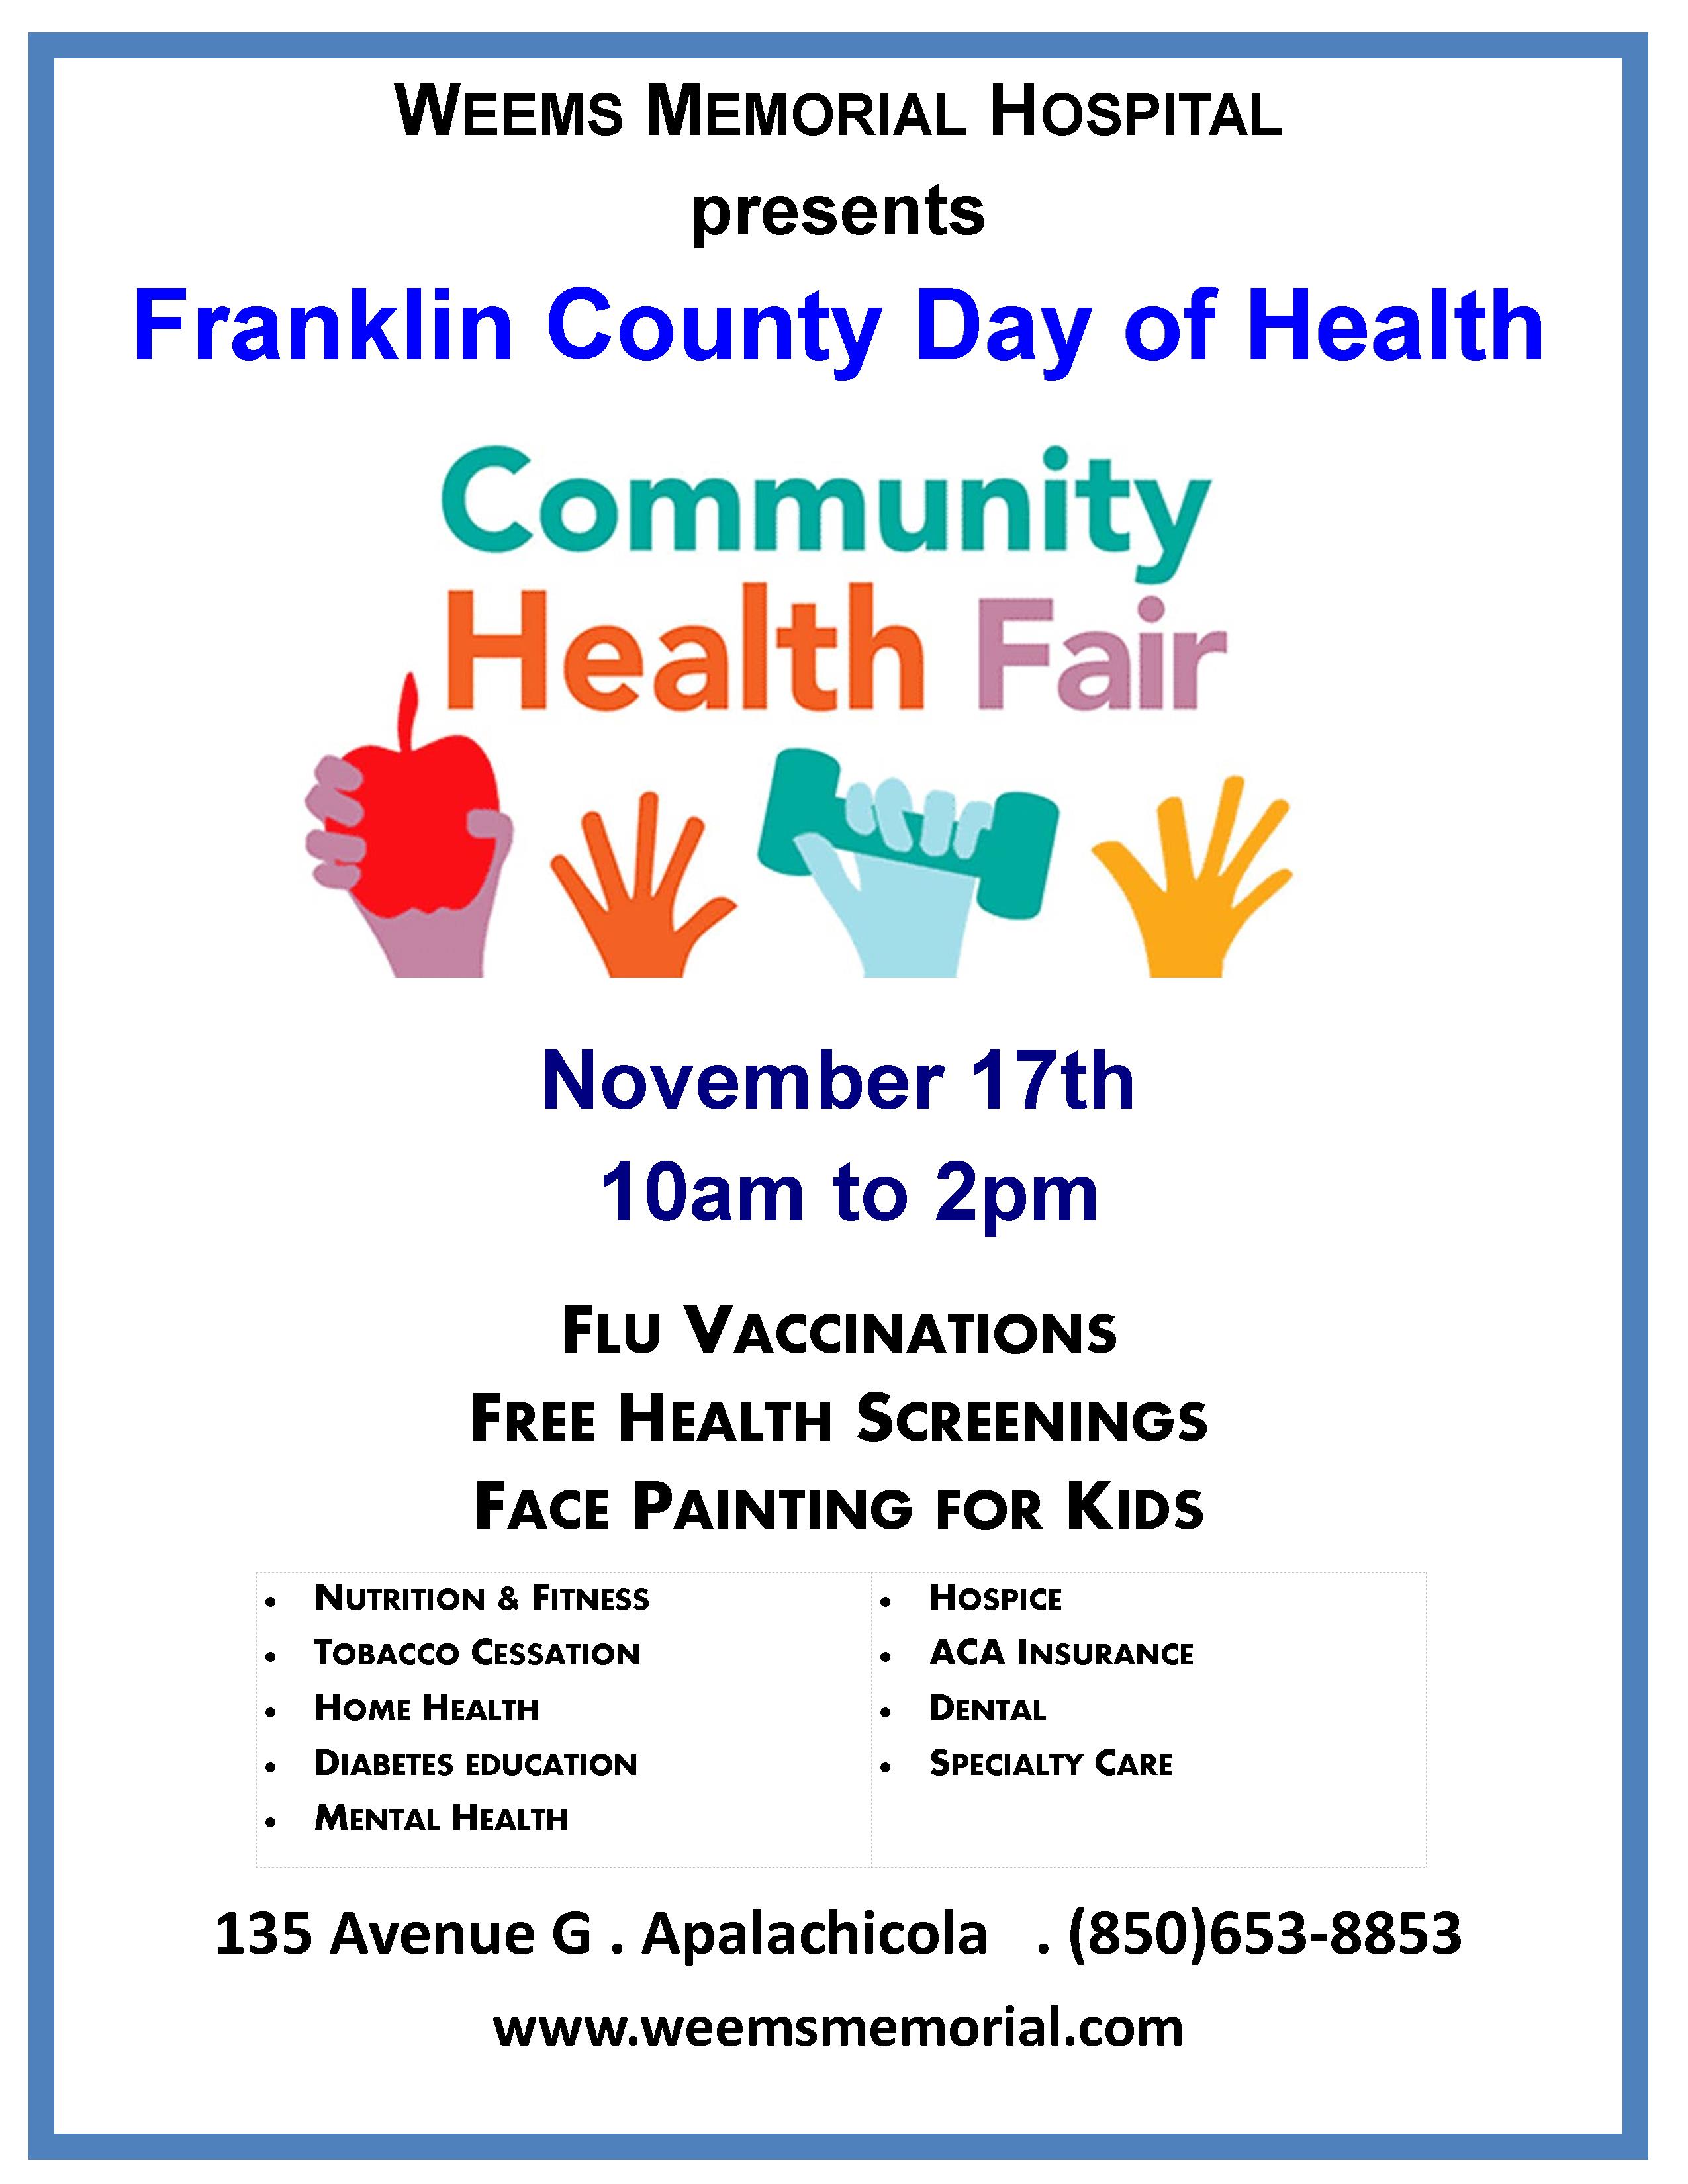 Franklin County Day of Health Community Health Fair